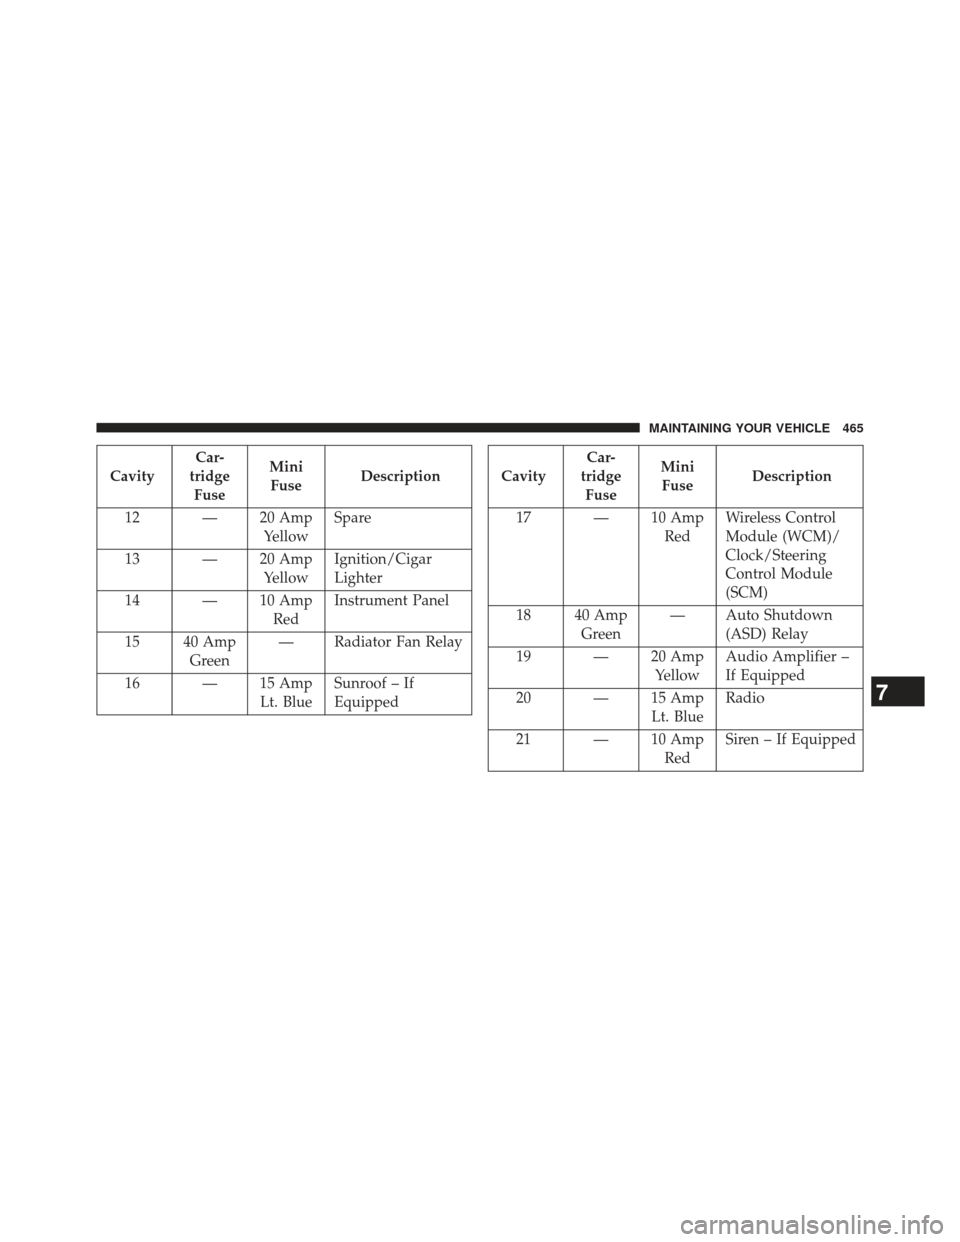 DODGE AVENGER 2014 2.G Repair Manual CavityCar-
tridge Fuse Mini
Fuse Description
12 — 20 Amp YellowSpare
13 — 20 Amp YellowIgnition/Cigar
Lighter
14 — 10 Amp RedInstrument Panel
15 40 Amp Green — Radiator Fan Relay
16 — 15 Amp